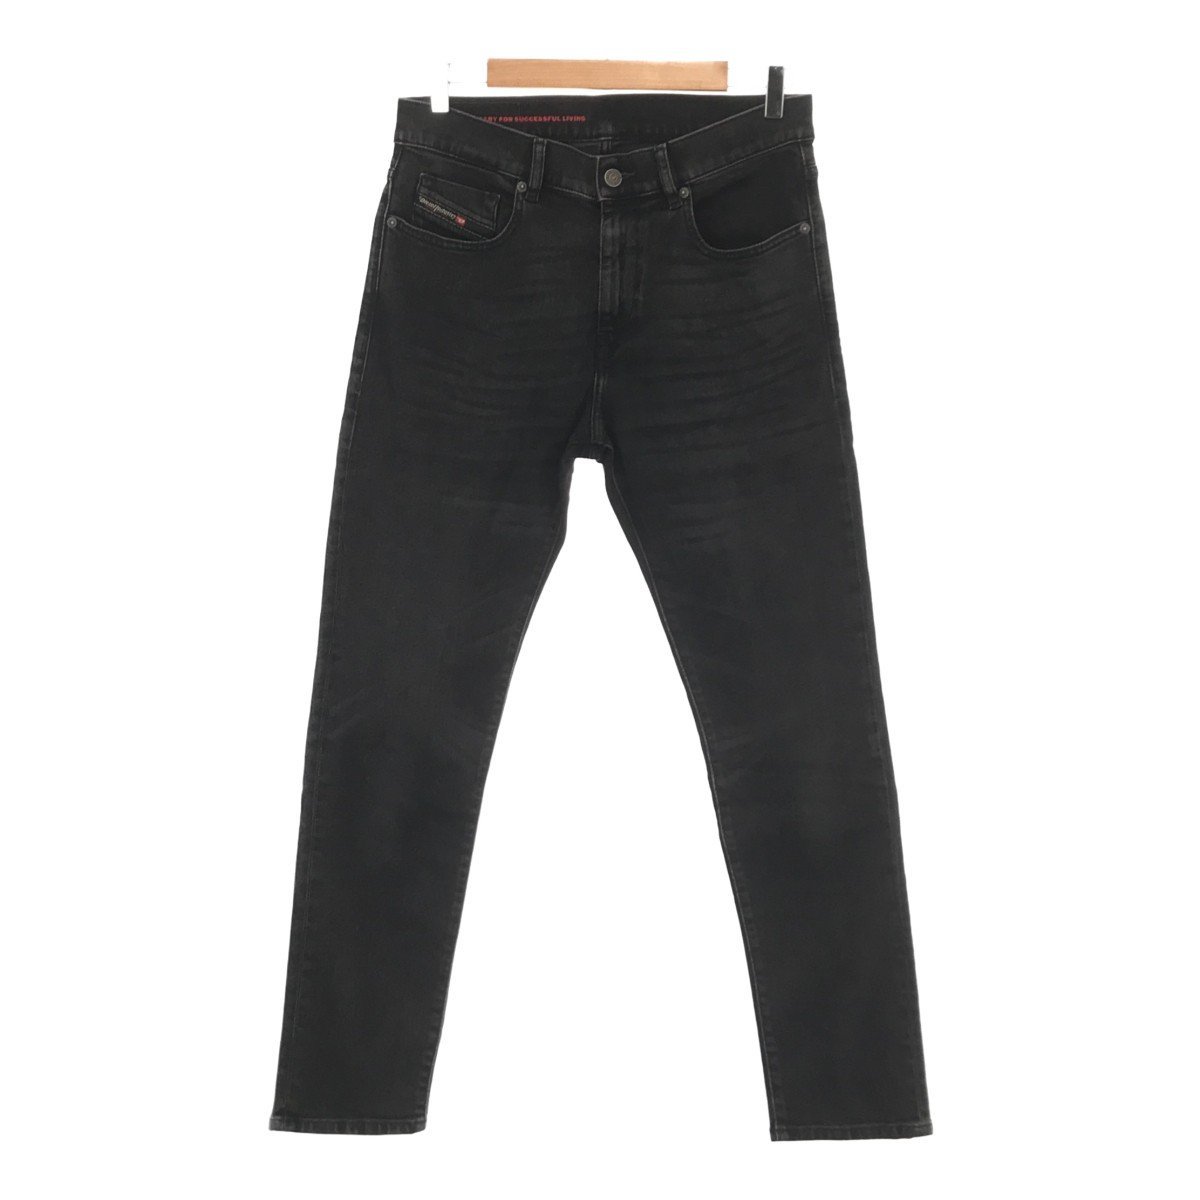 DIESEL ディーゼル 【men641D】 2019 D-STURKT Black Denim Jeans ブラックデニムジーンズ パンツ メンズ W30 HC